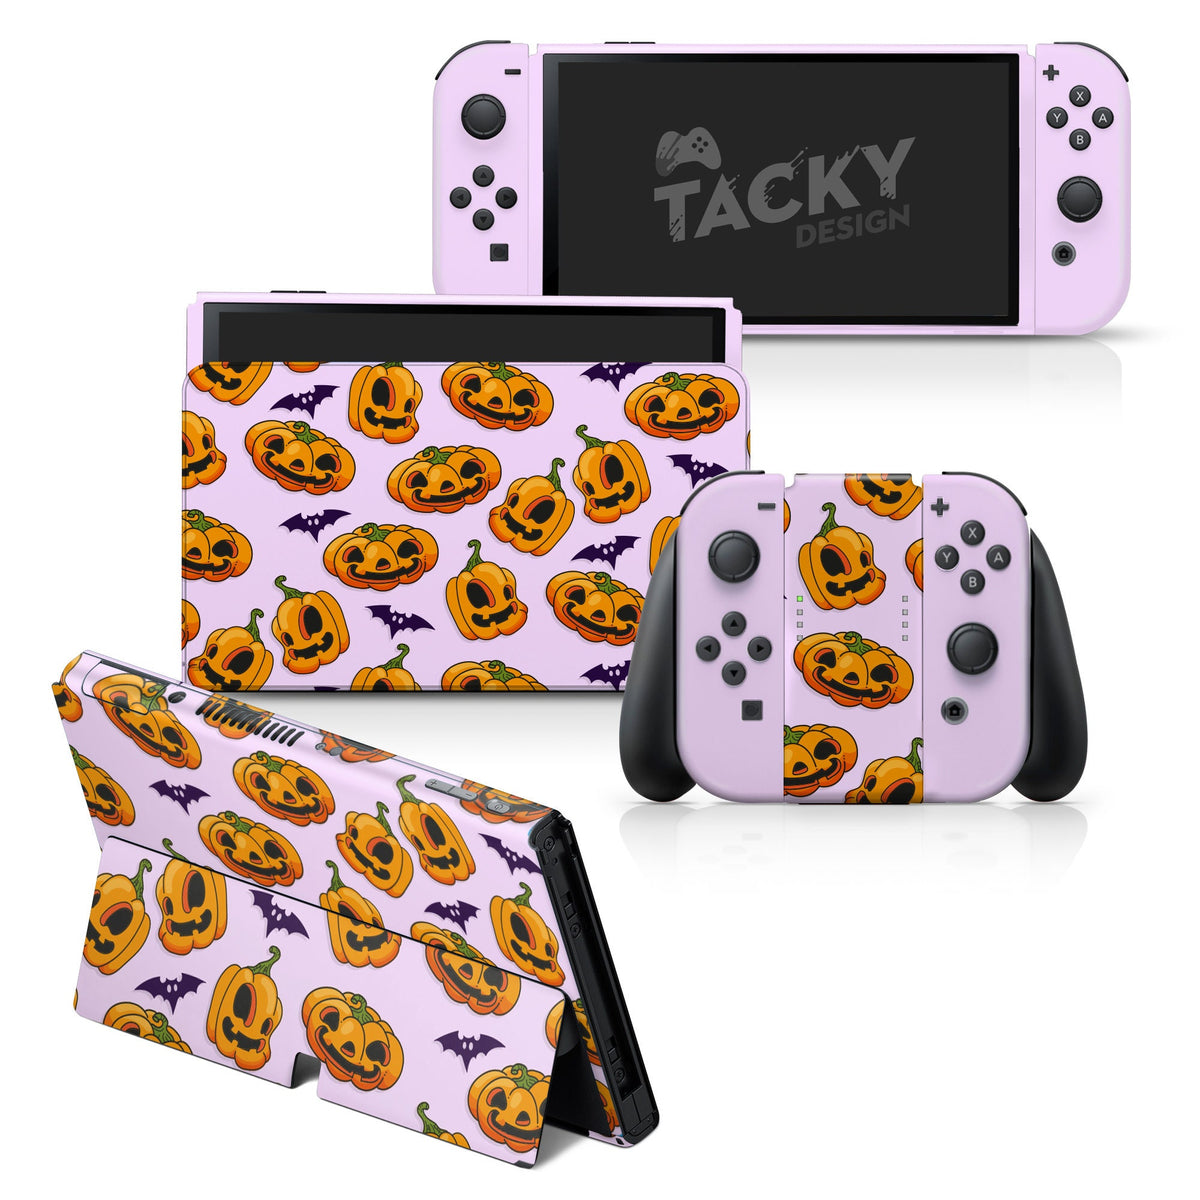 Halloween Nintendo Switches oled skin Pumpkin, Spooky Kawaii switch oled skin Full wrap cover decal vinyl 3m stickers